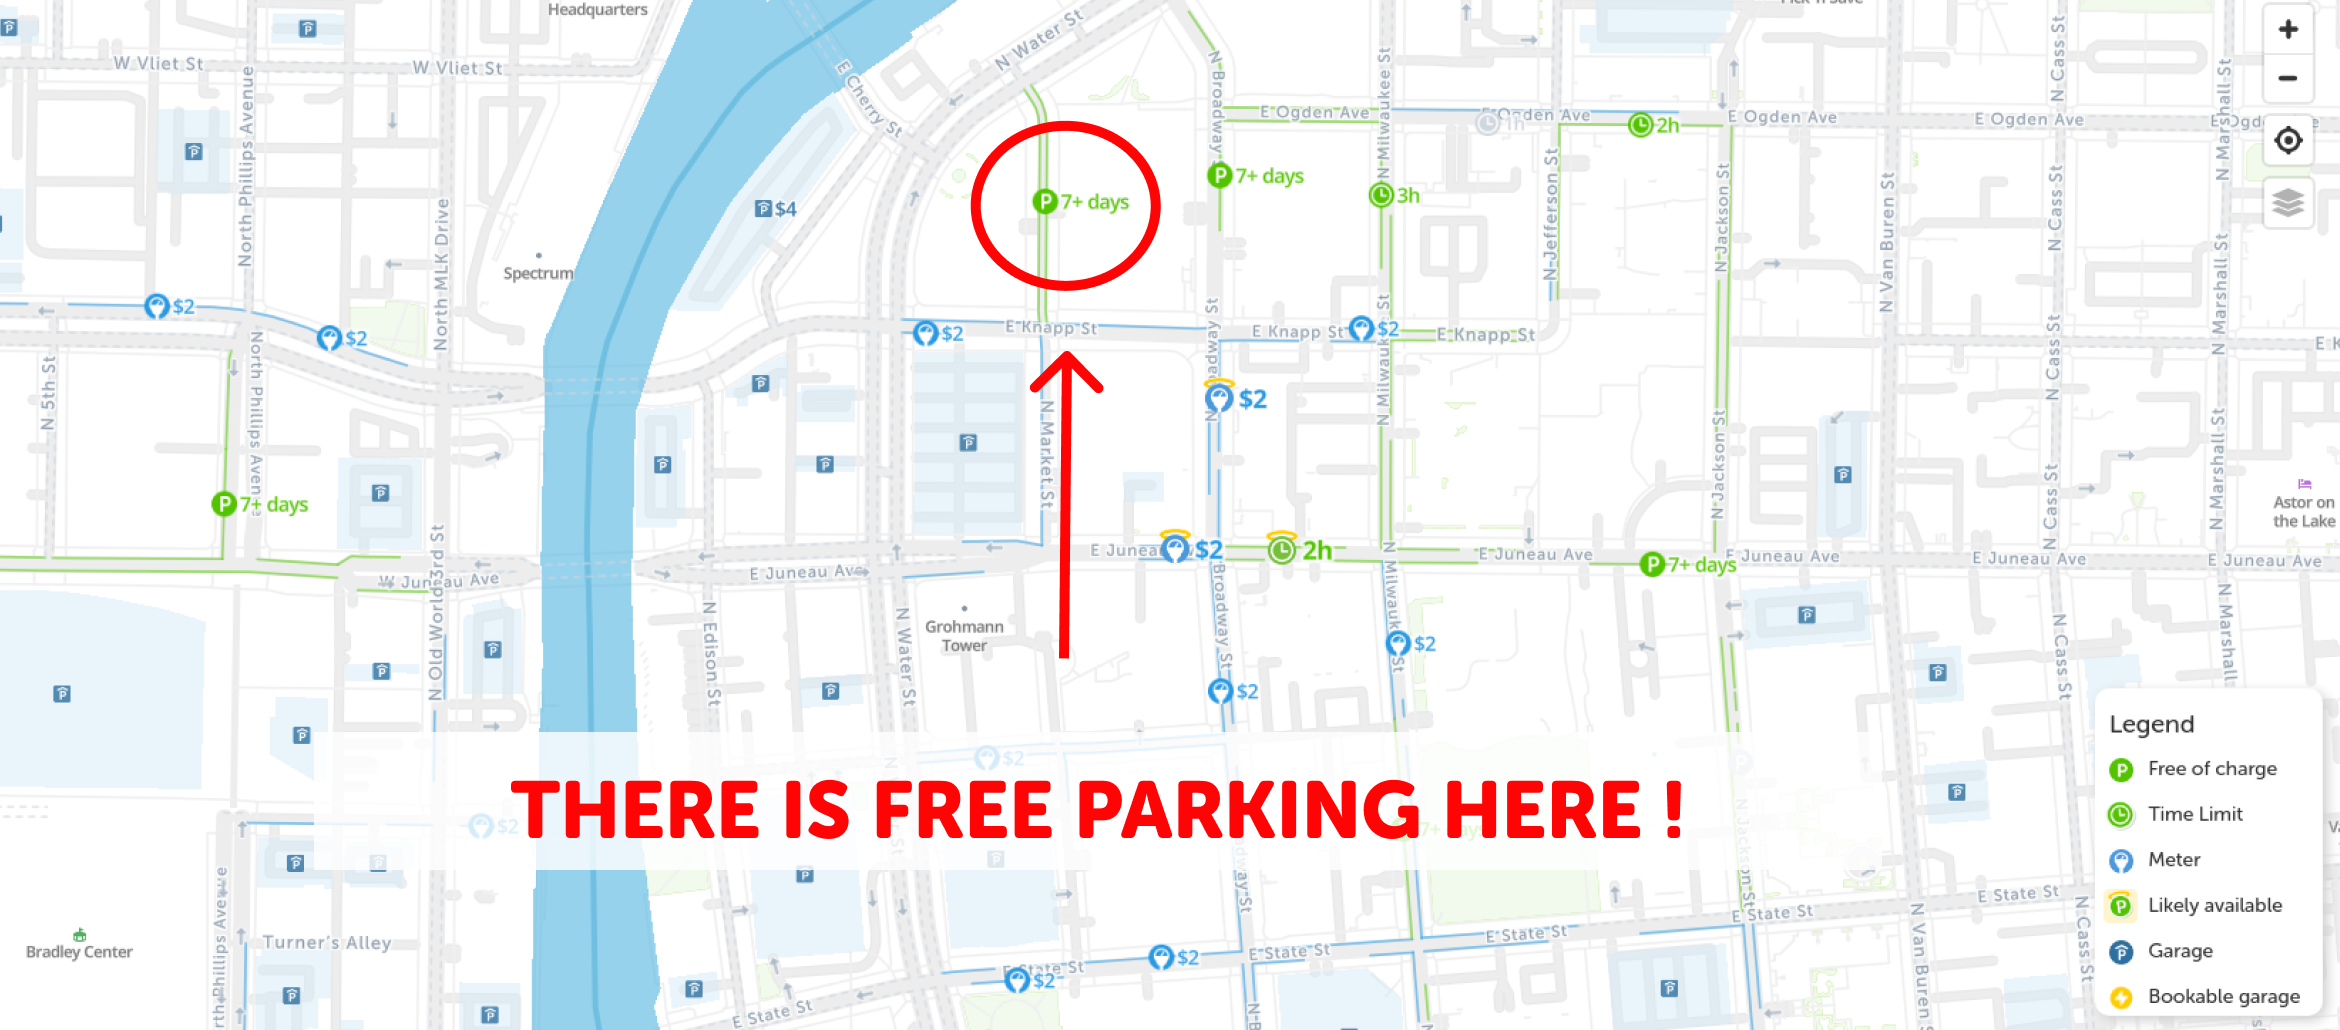 map of free parking in Milwaukee - SpotAngels